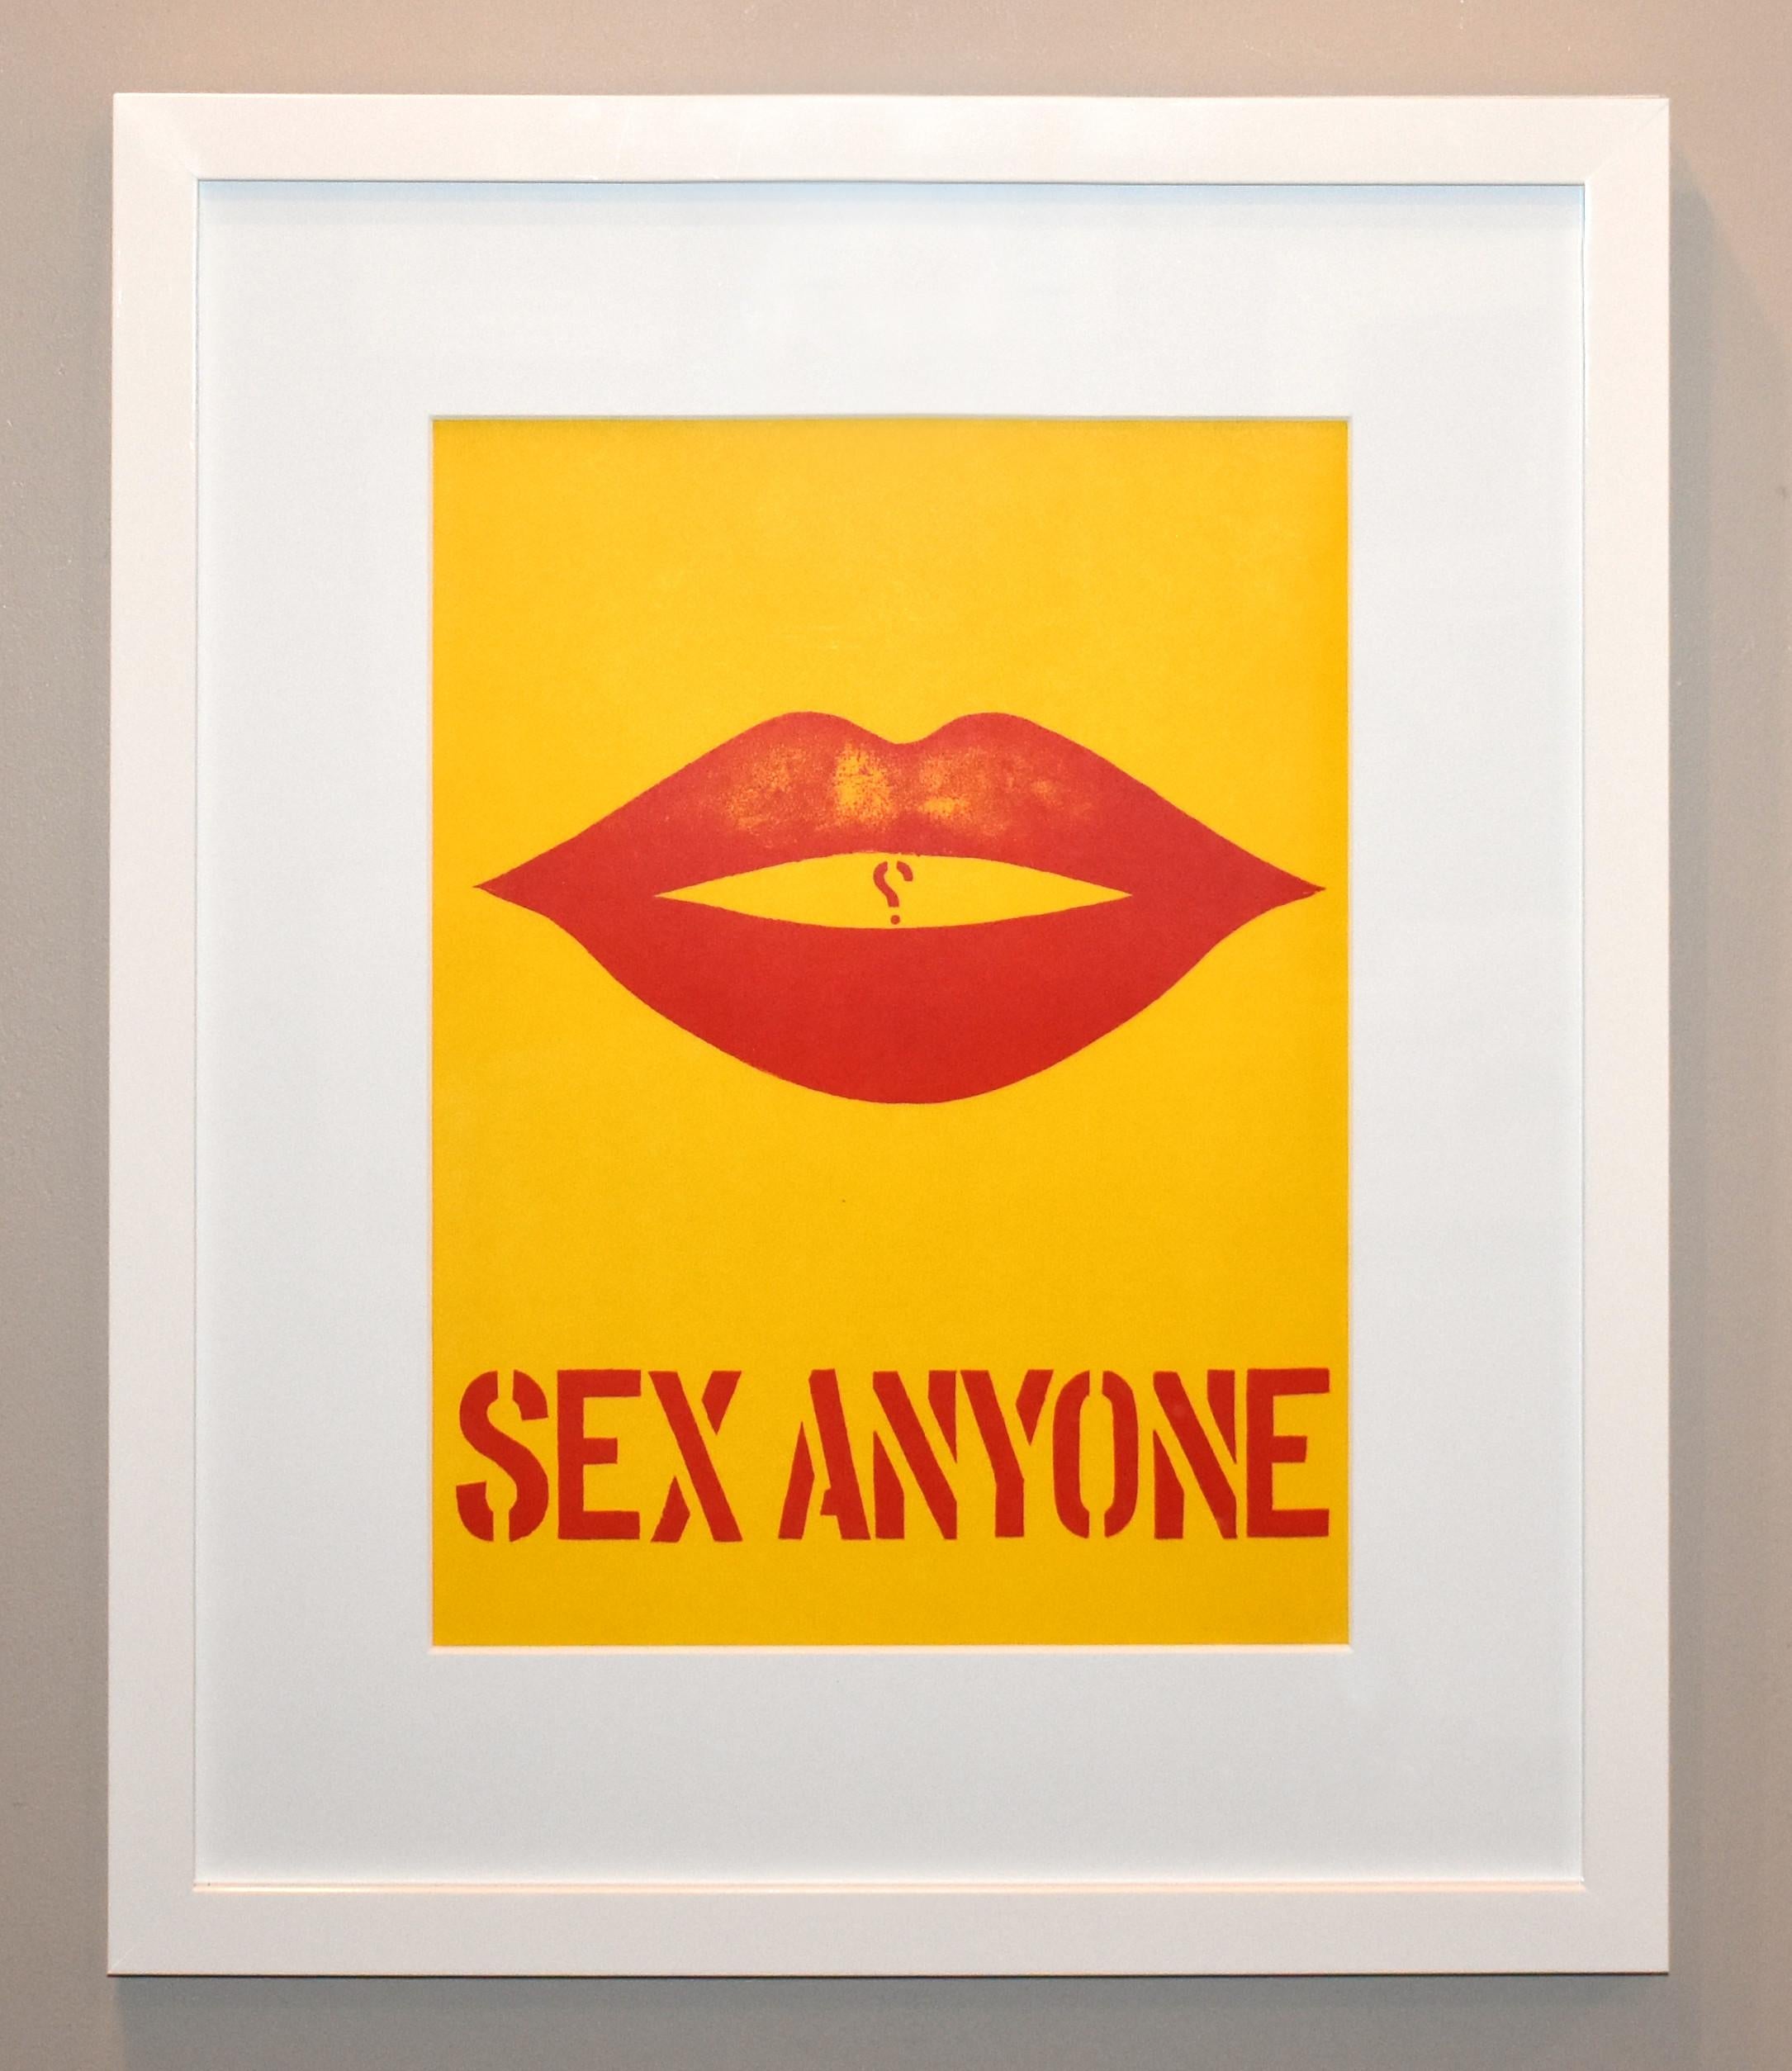 Sex Anyone - Print by Robert Indiana